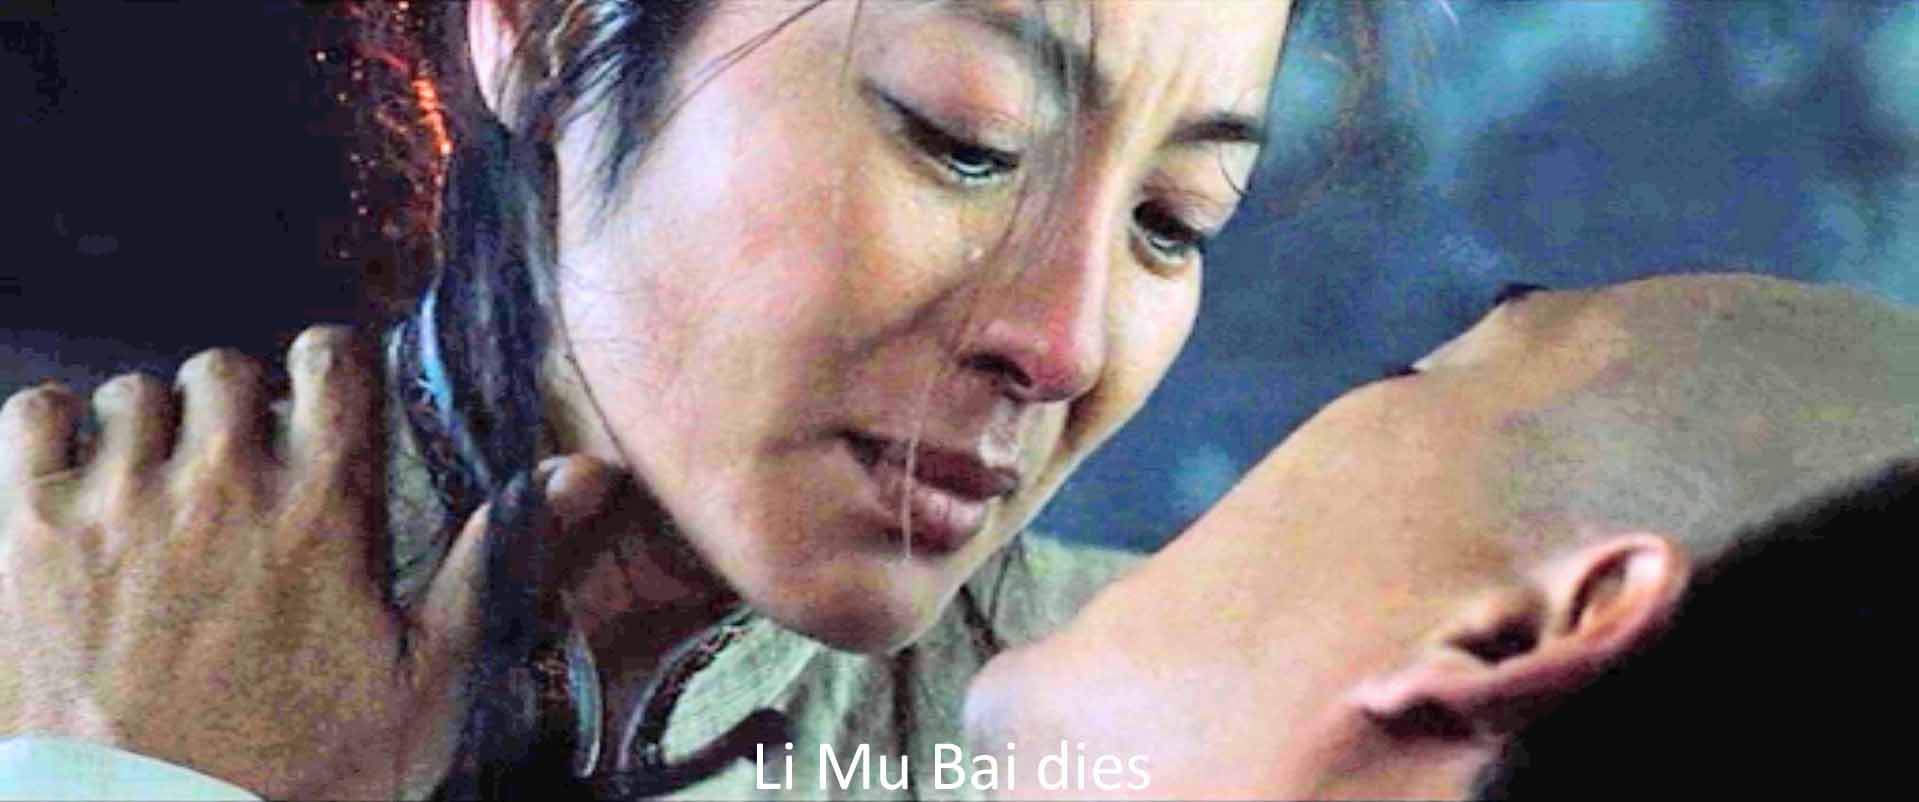 Li Mu Bai dies